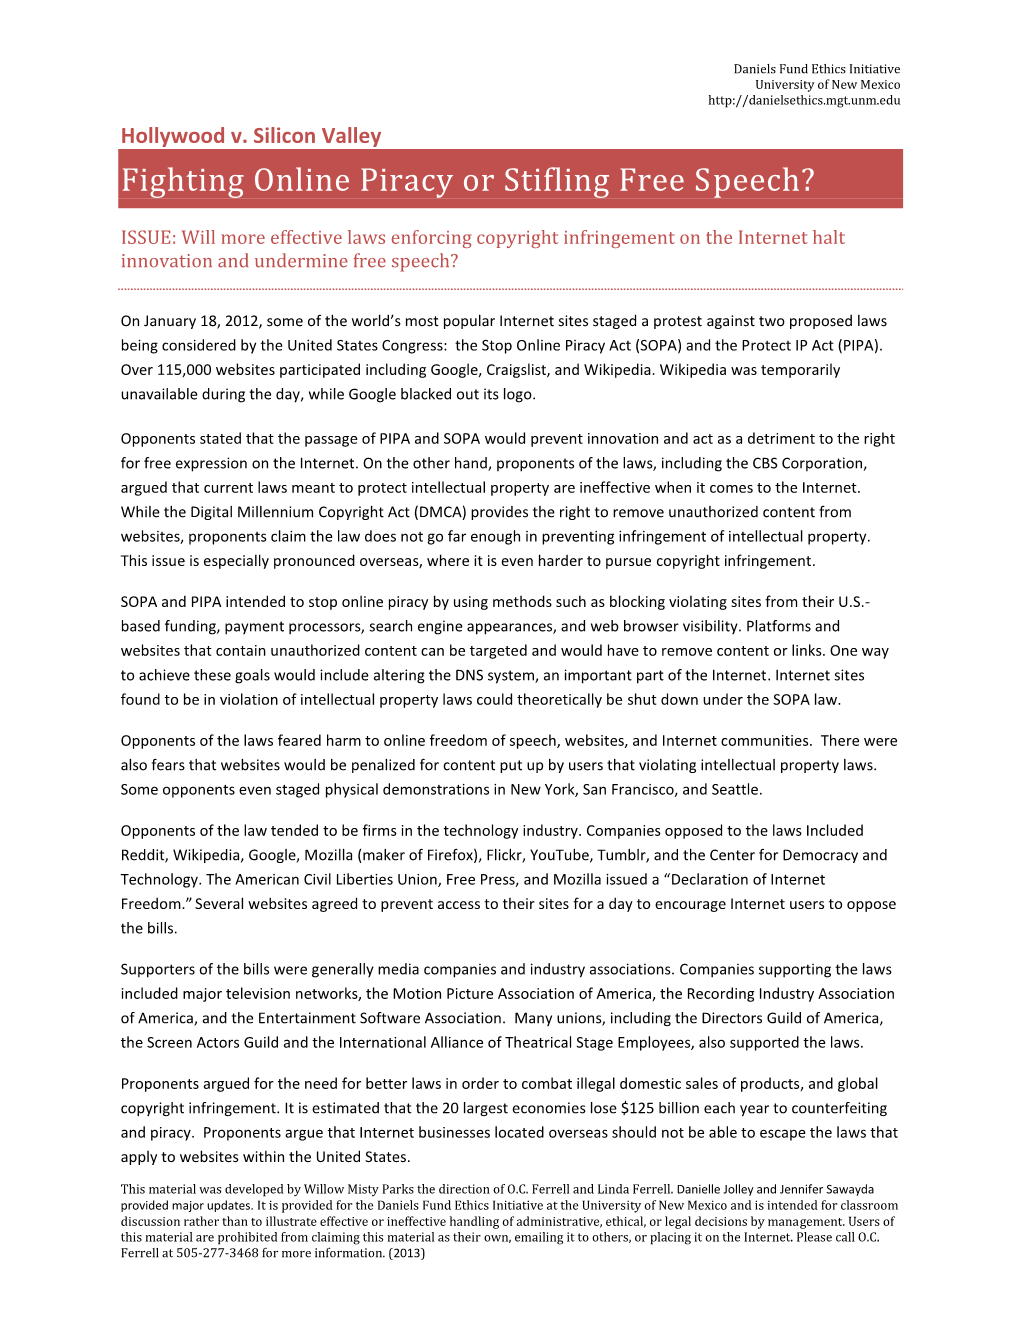 Fighting Online Piracy Or Stifling Free Speech?